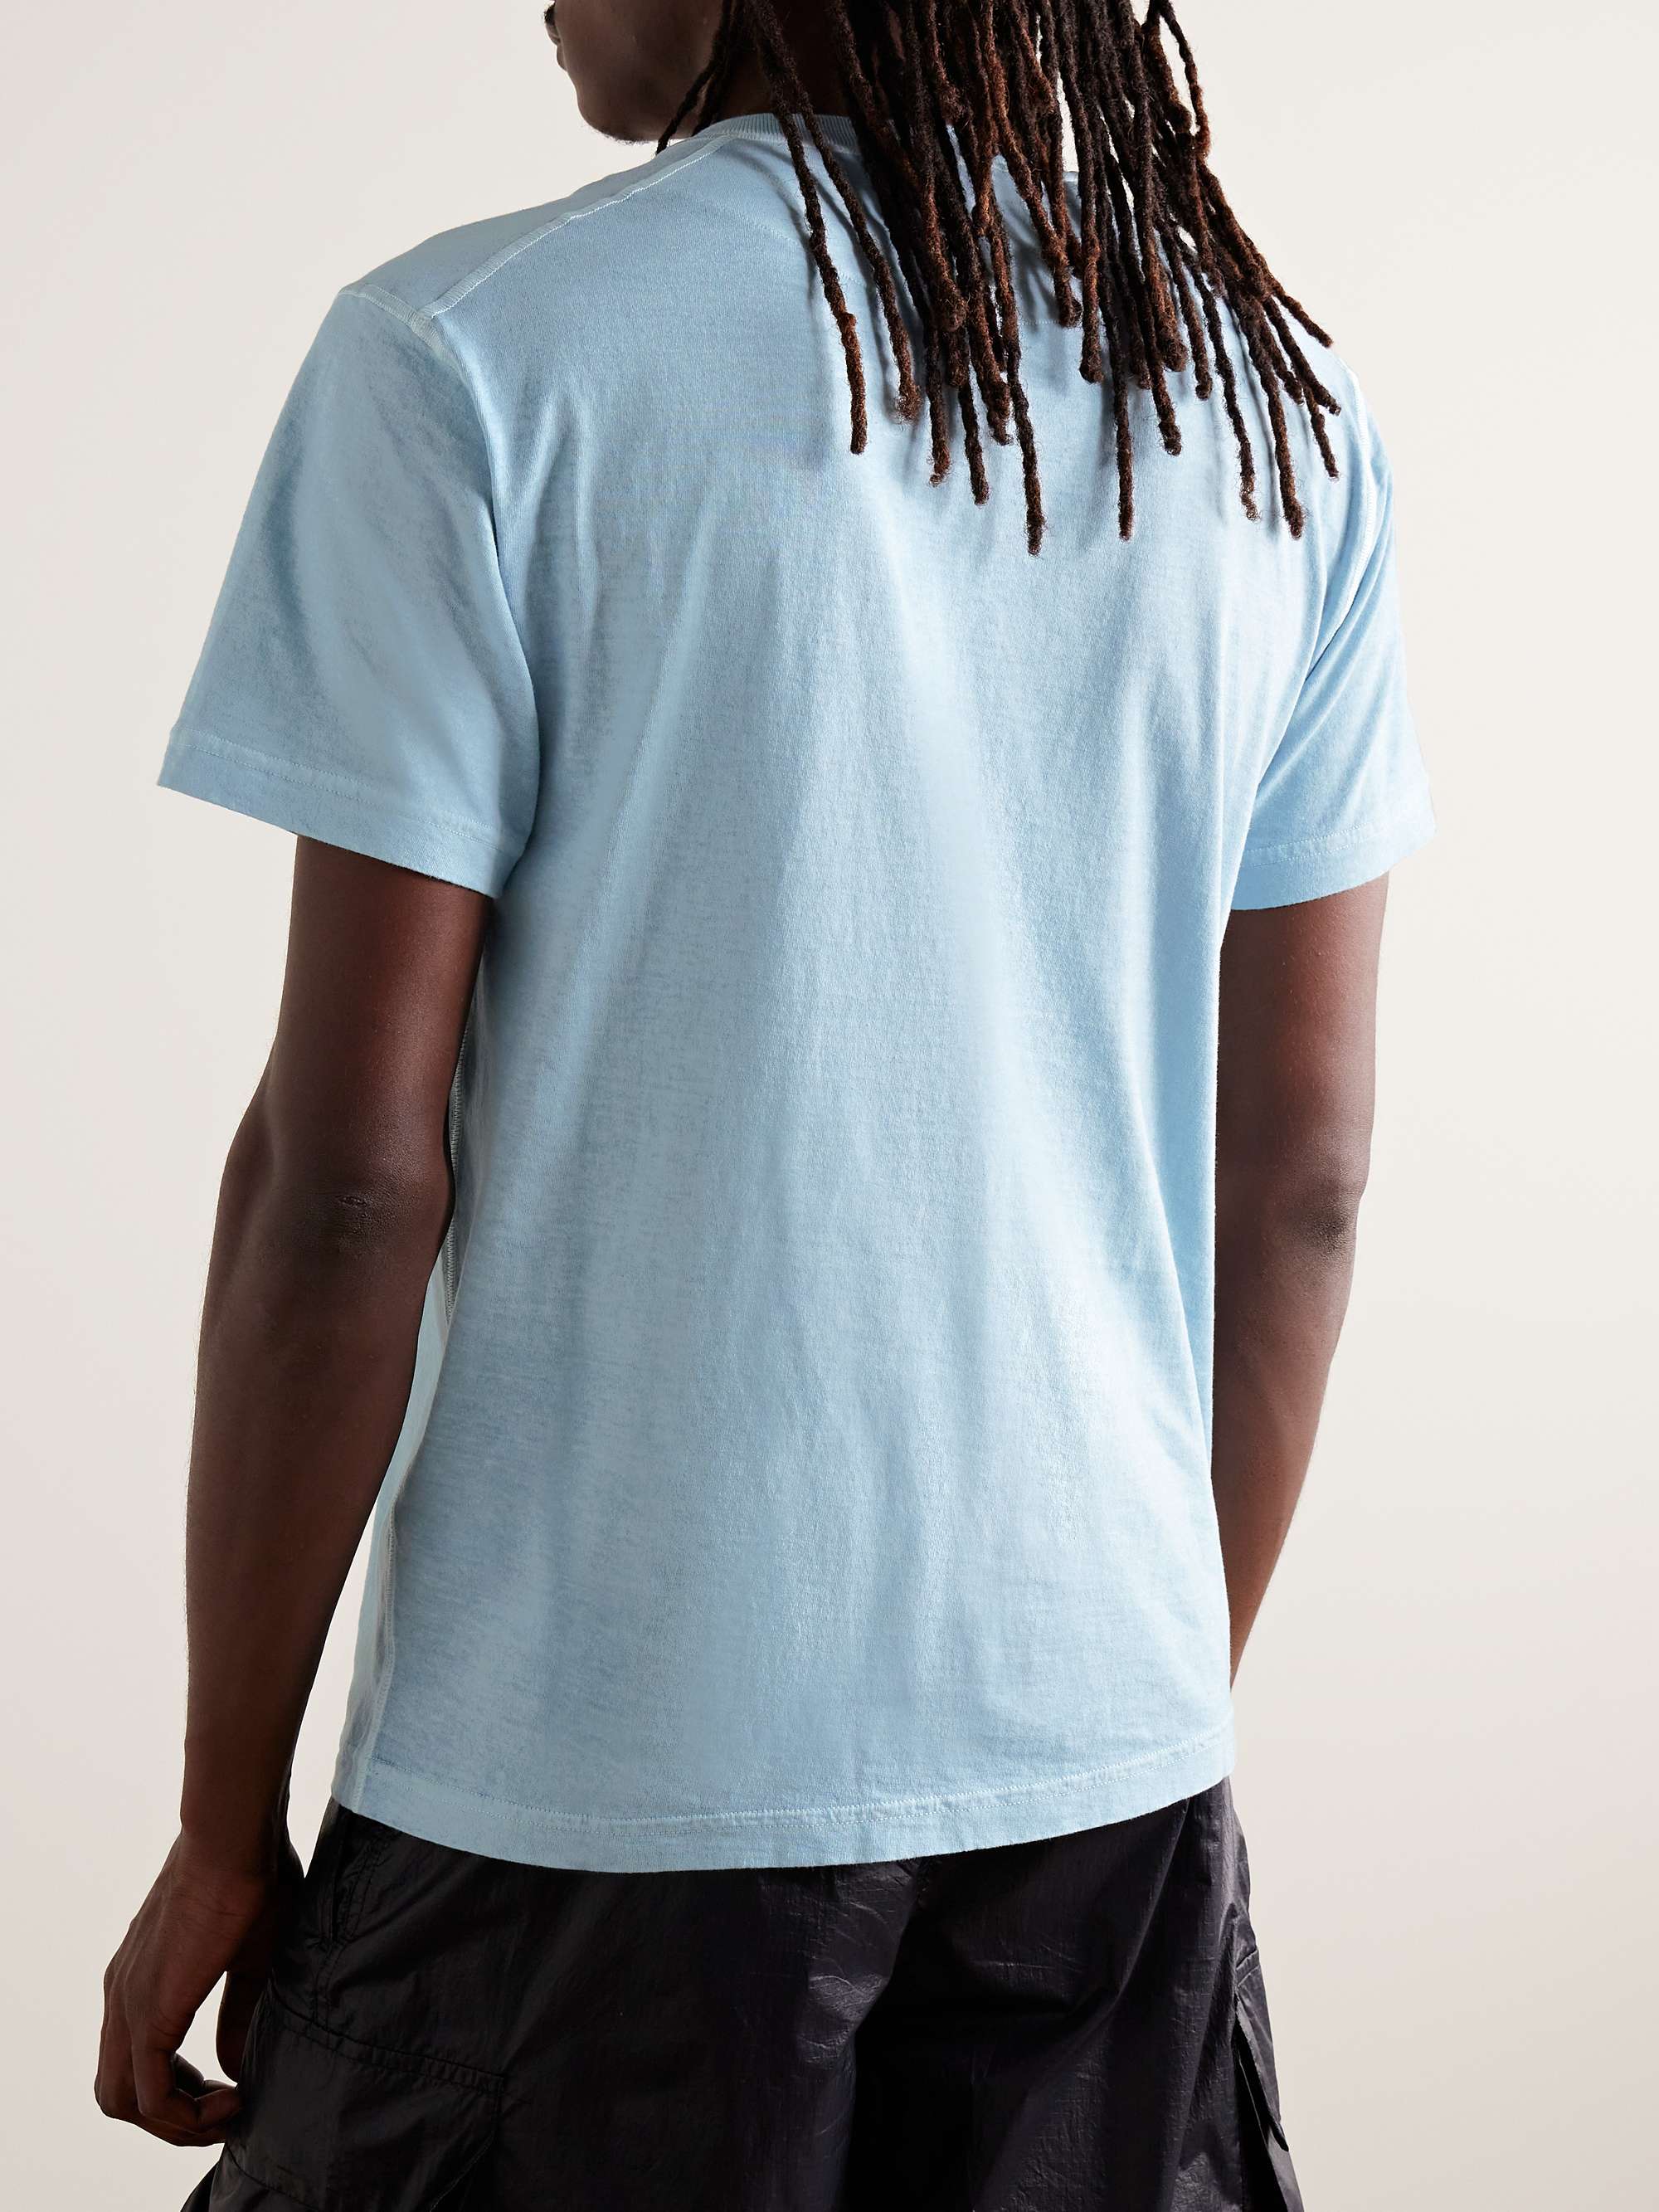 STONE ISLAND Logo-Appliquéd Cotton-Jersey T-Shirt for Men | MR PORTER